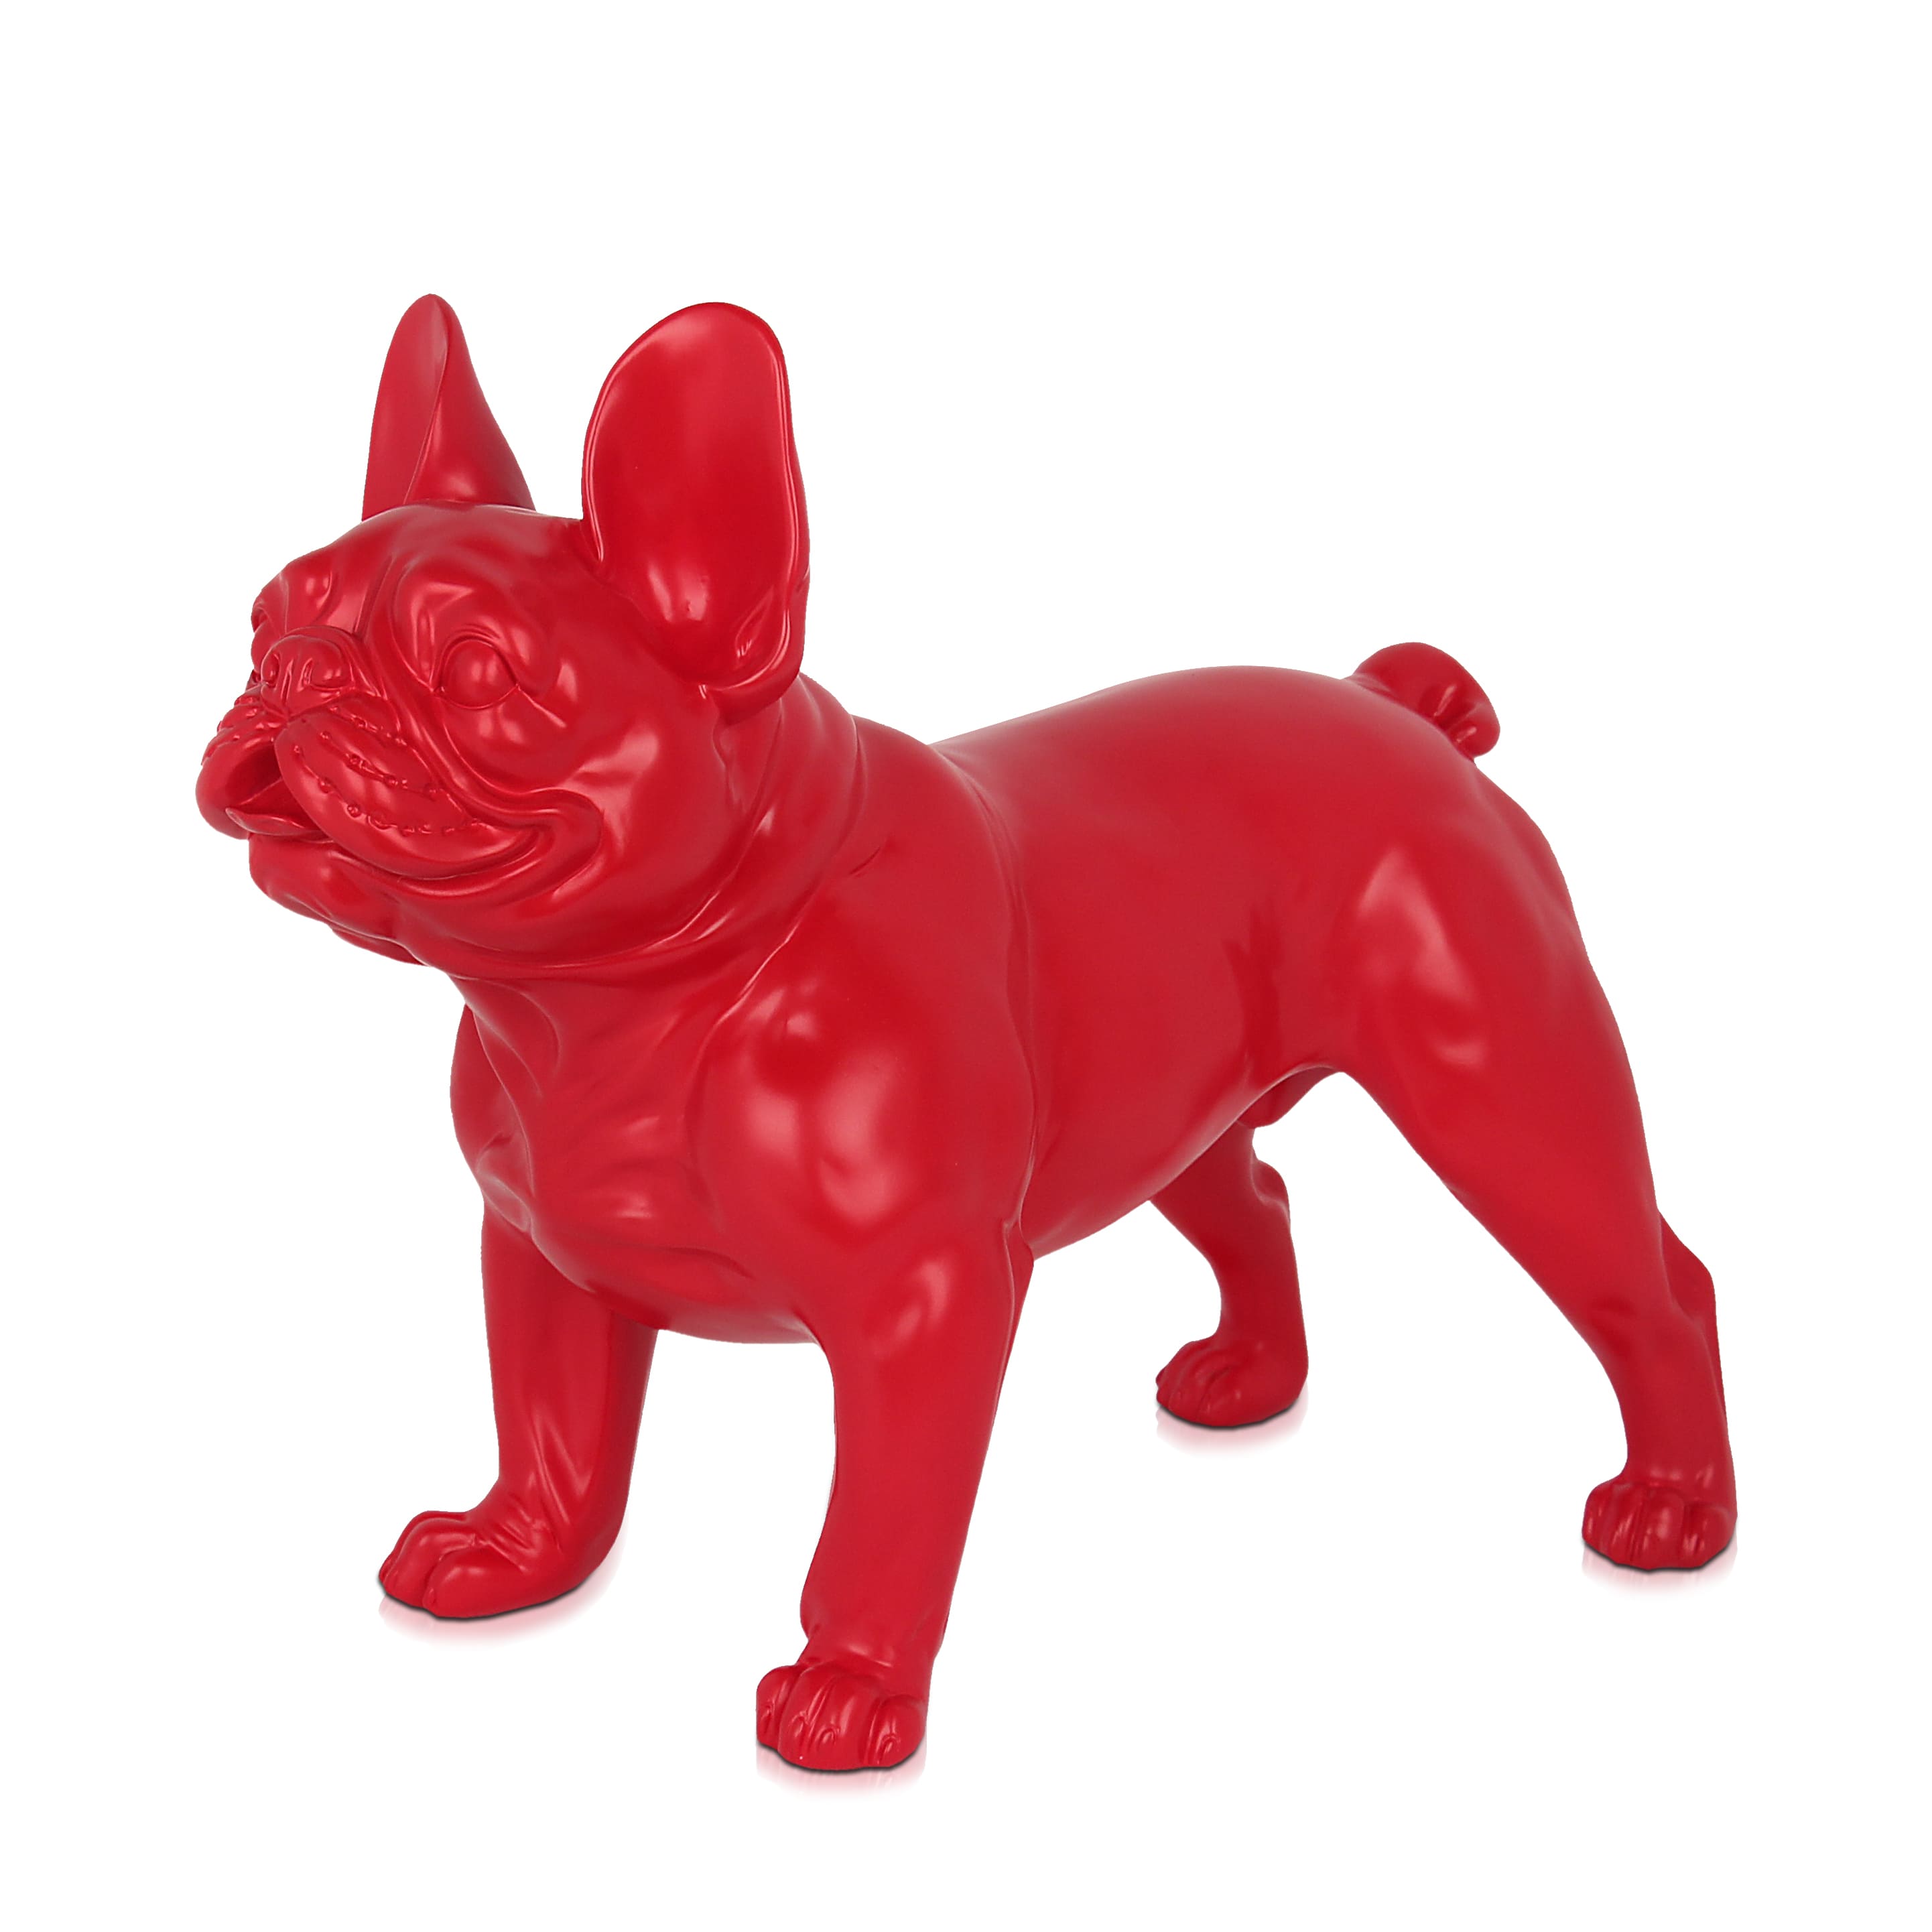 Resin sculpture French bulldog